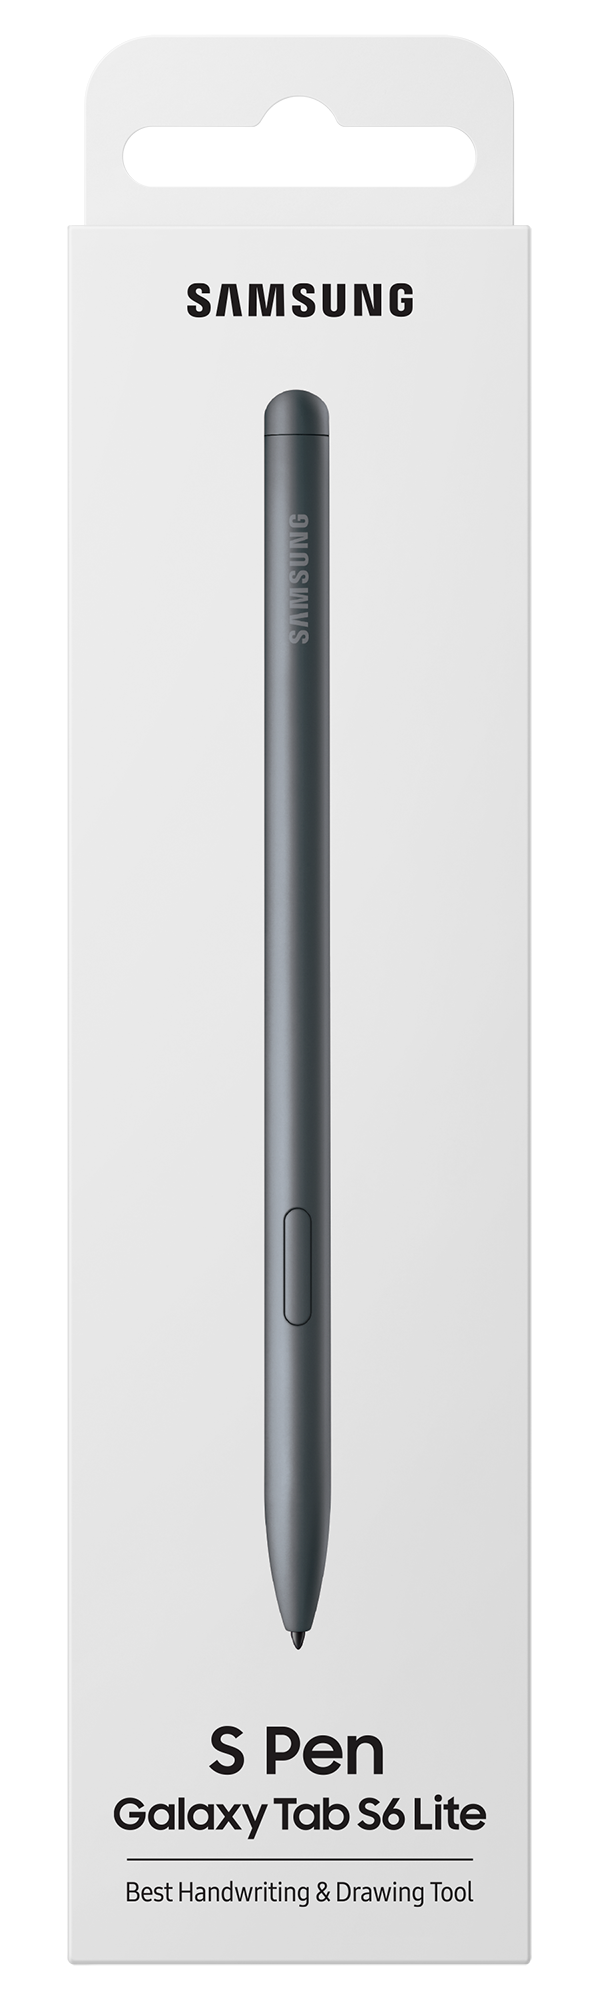 Galaxy Tab S6 lite S pen Oxford Grey